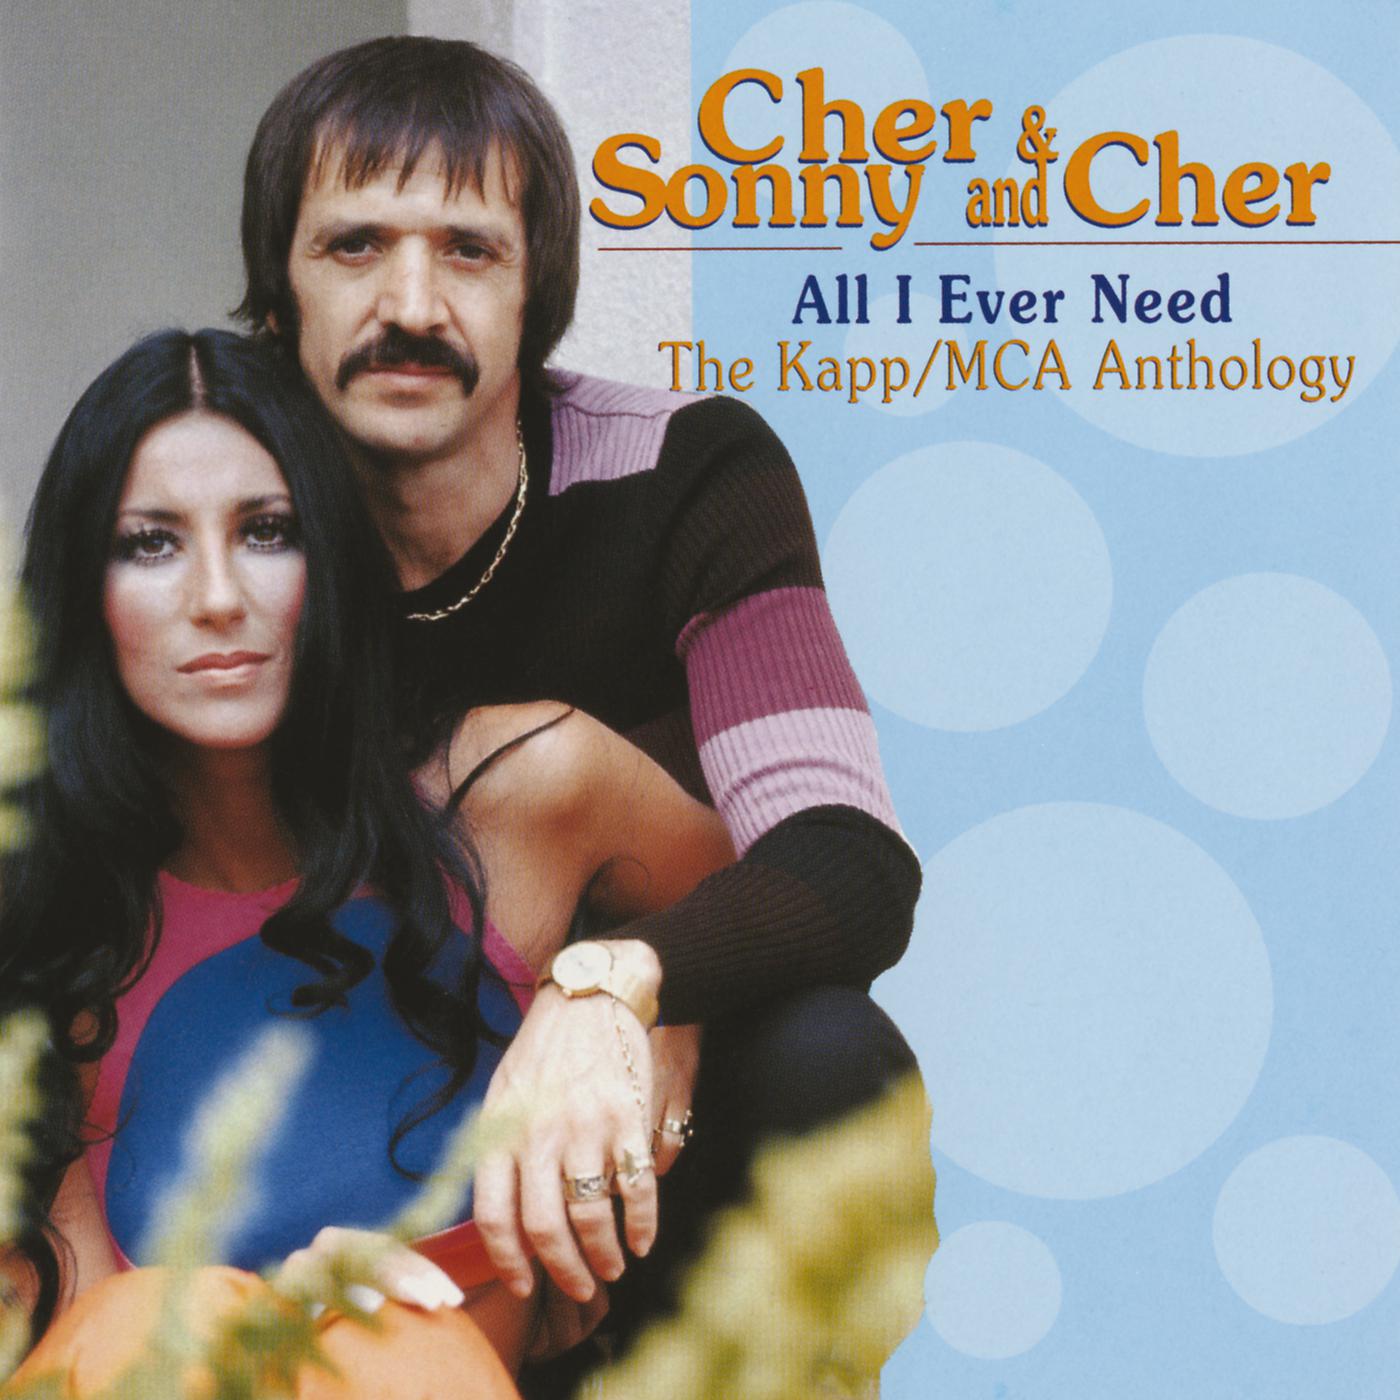 Альбом All I Ever Need - The Kapp/MCA Anthology исполнителя Sonny & Cher, Cher